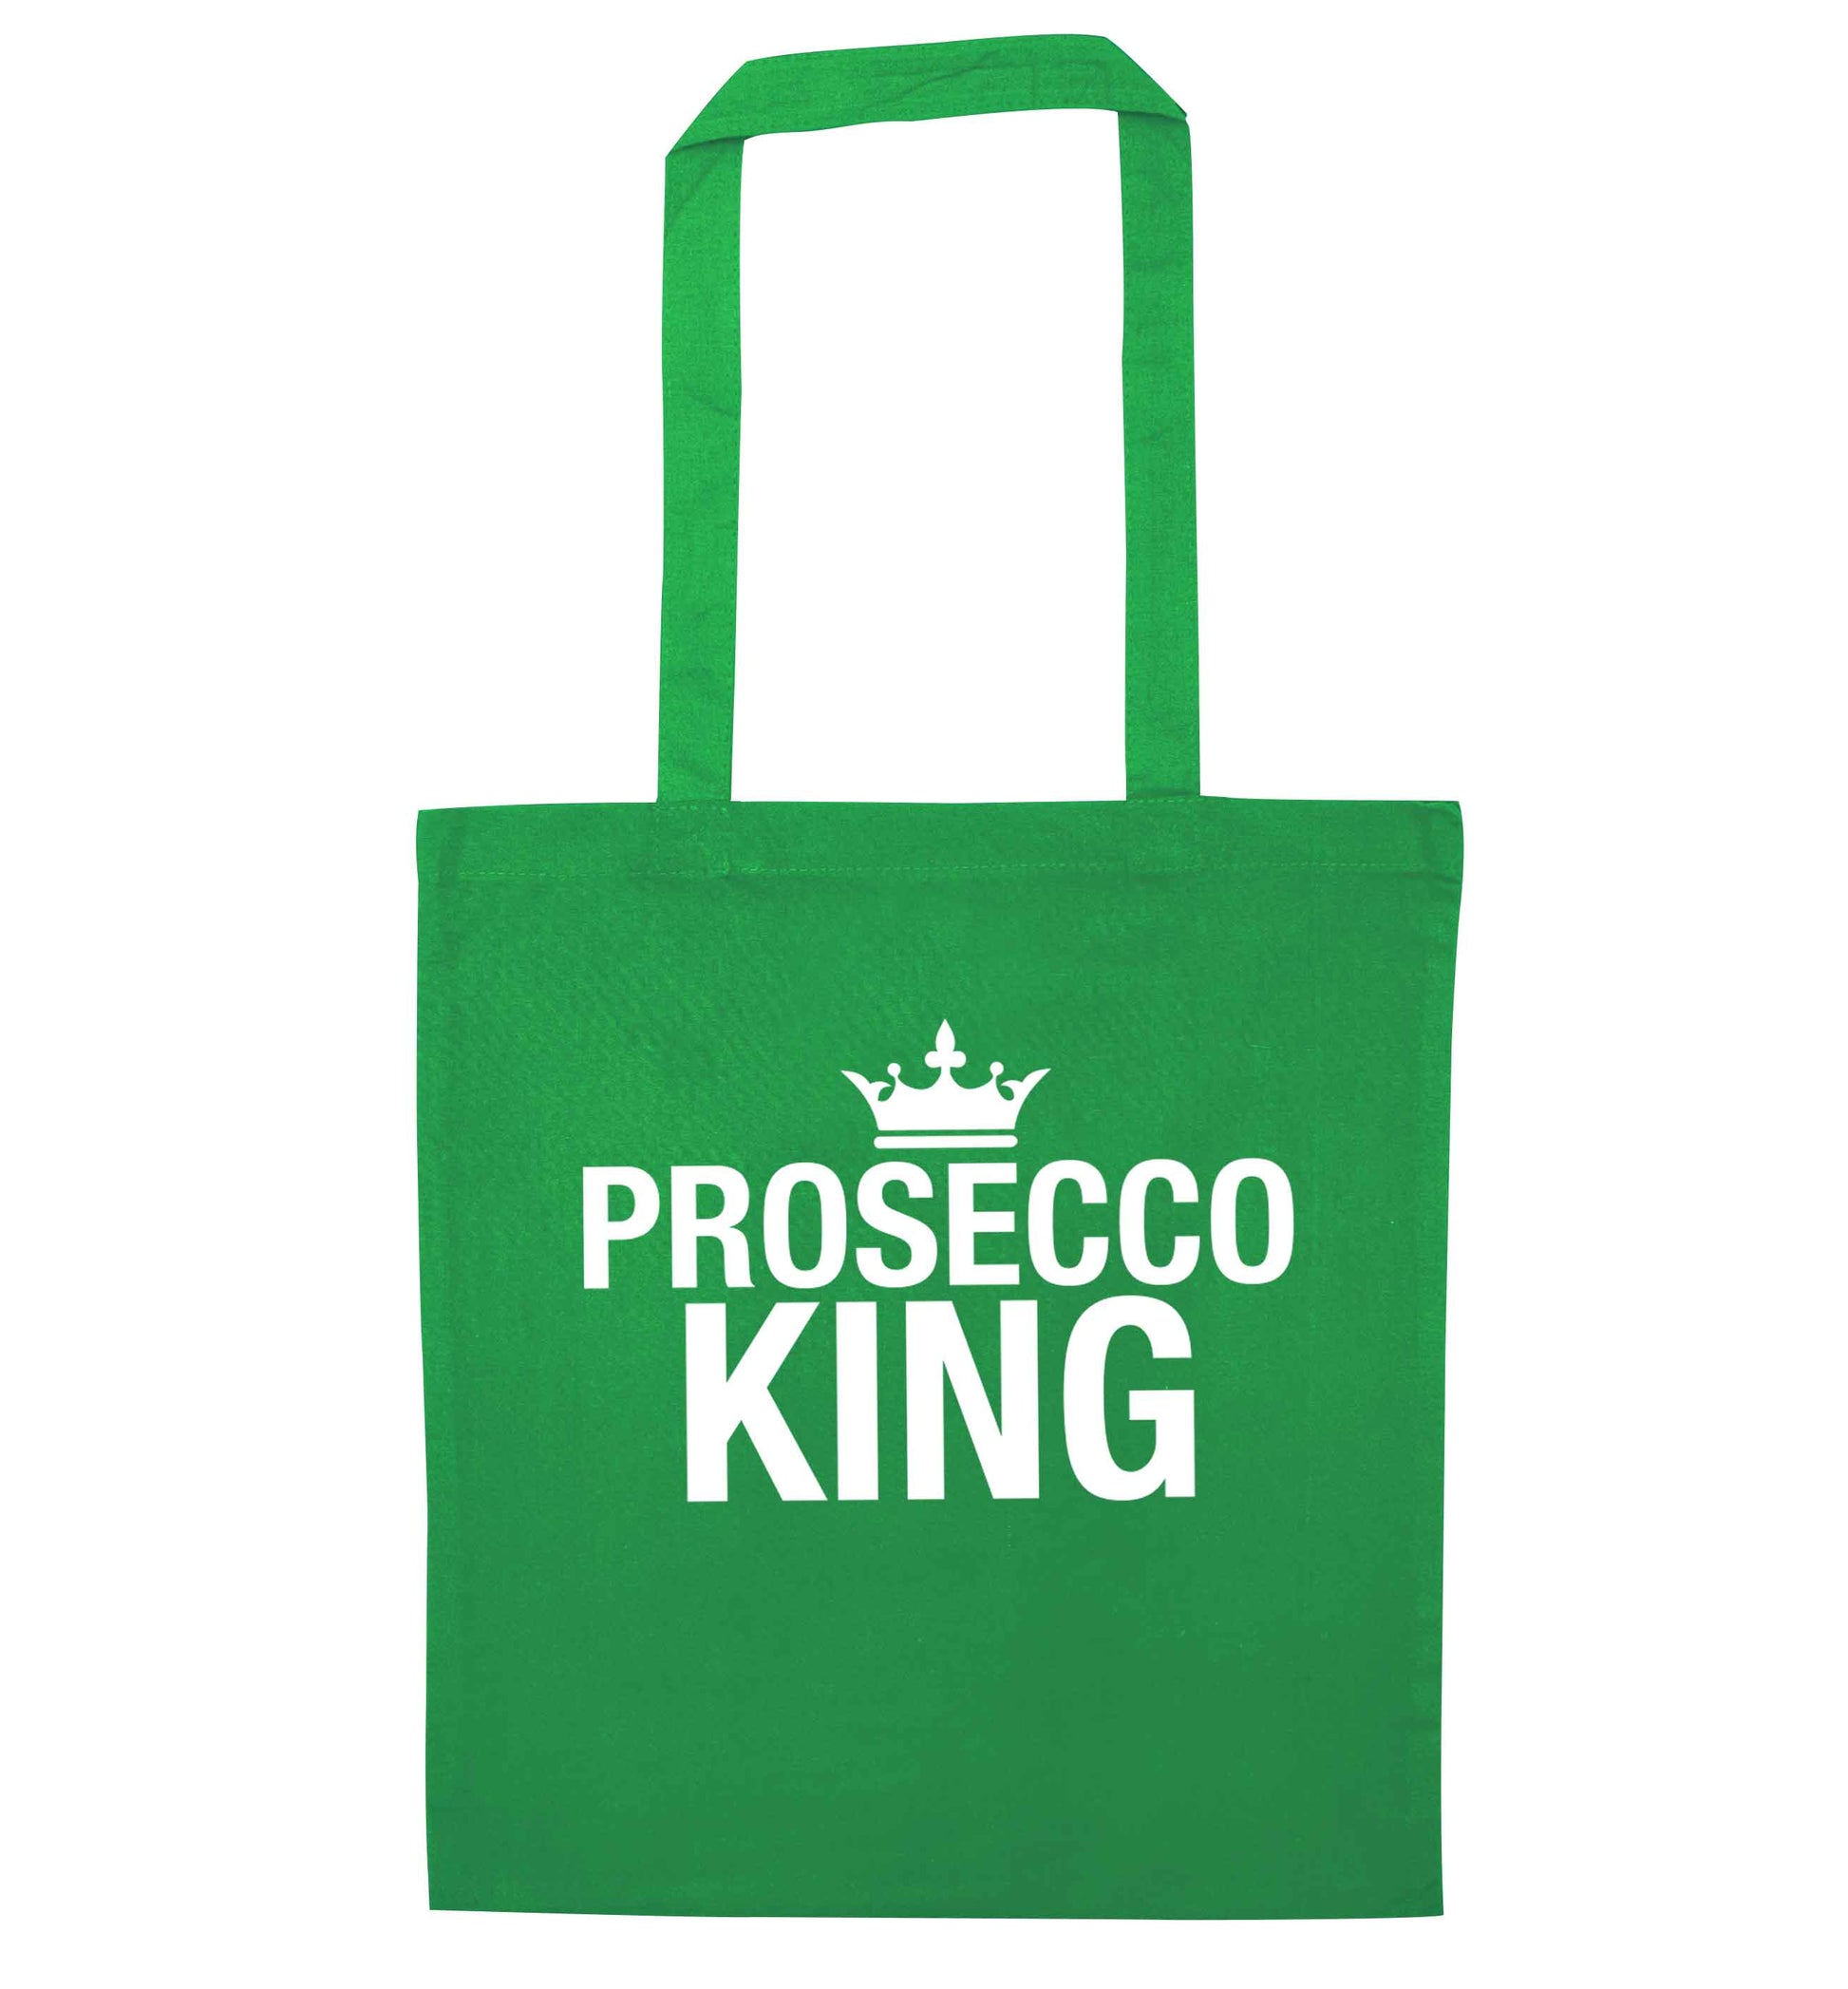 Prosecco king green tote bag